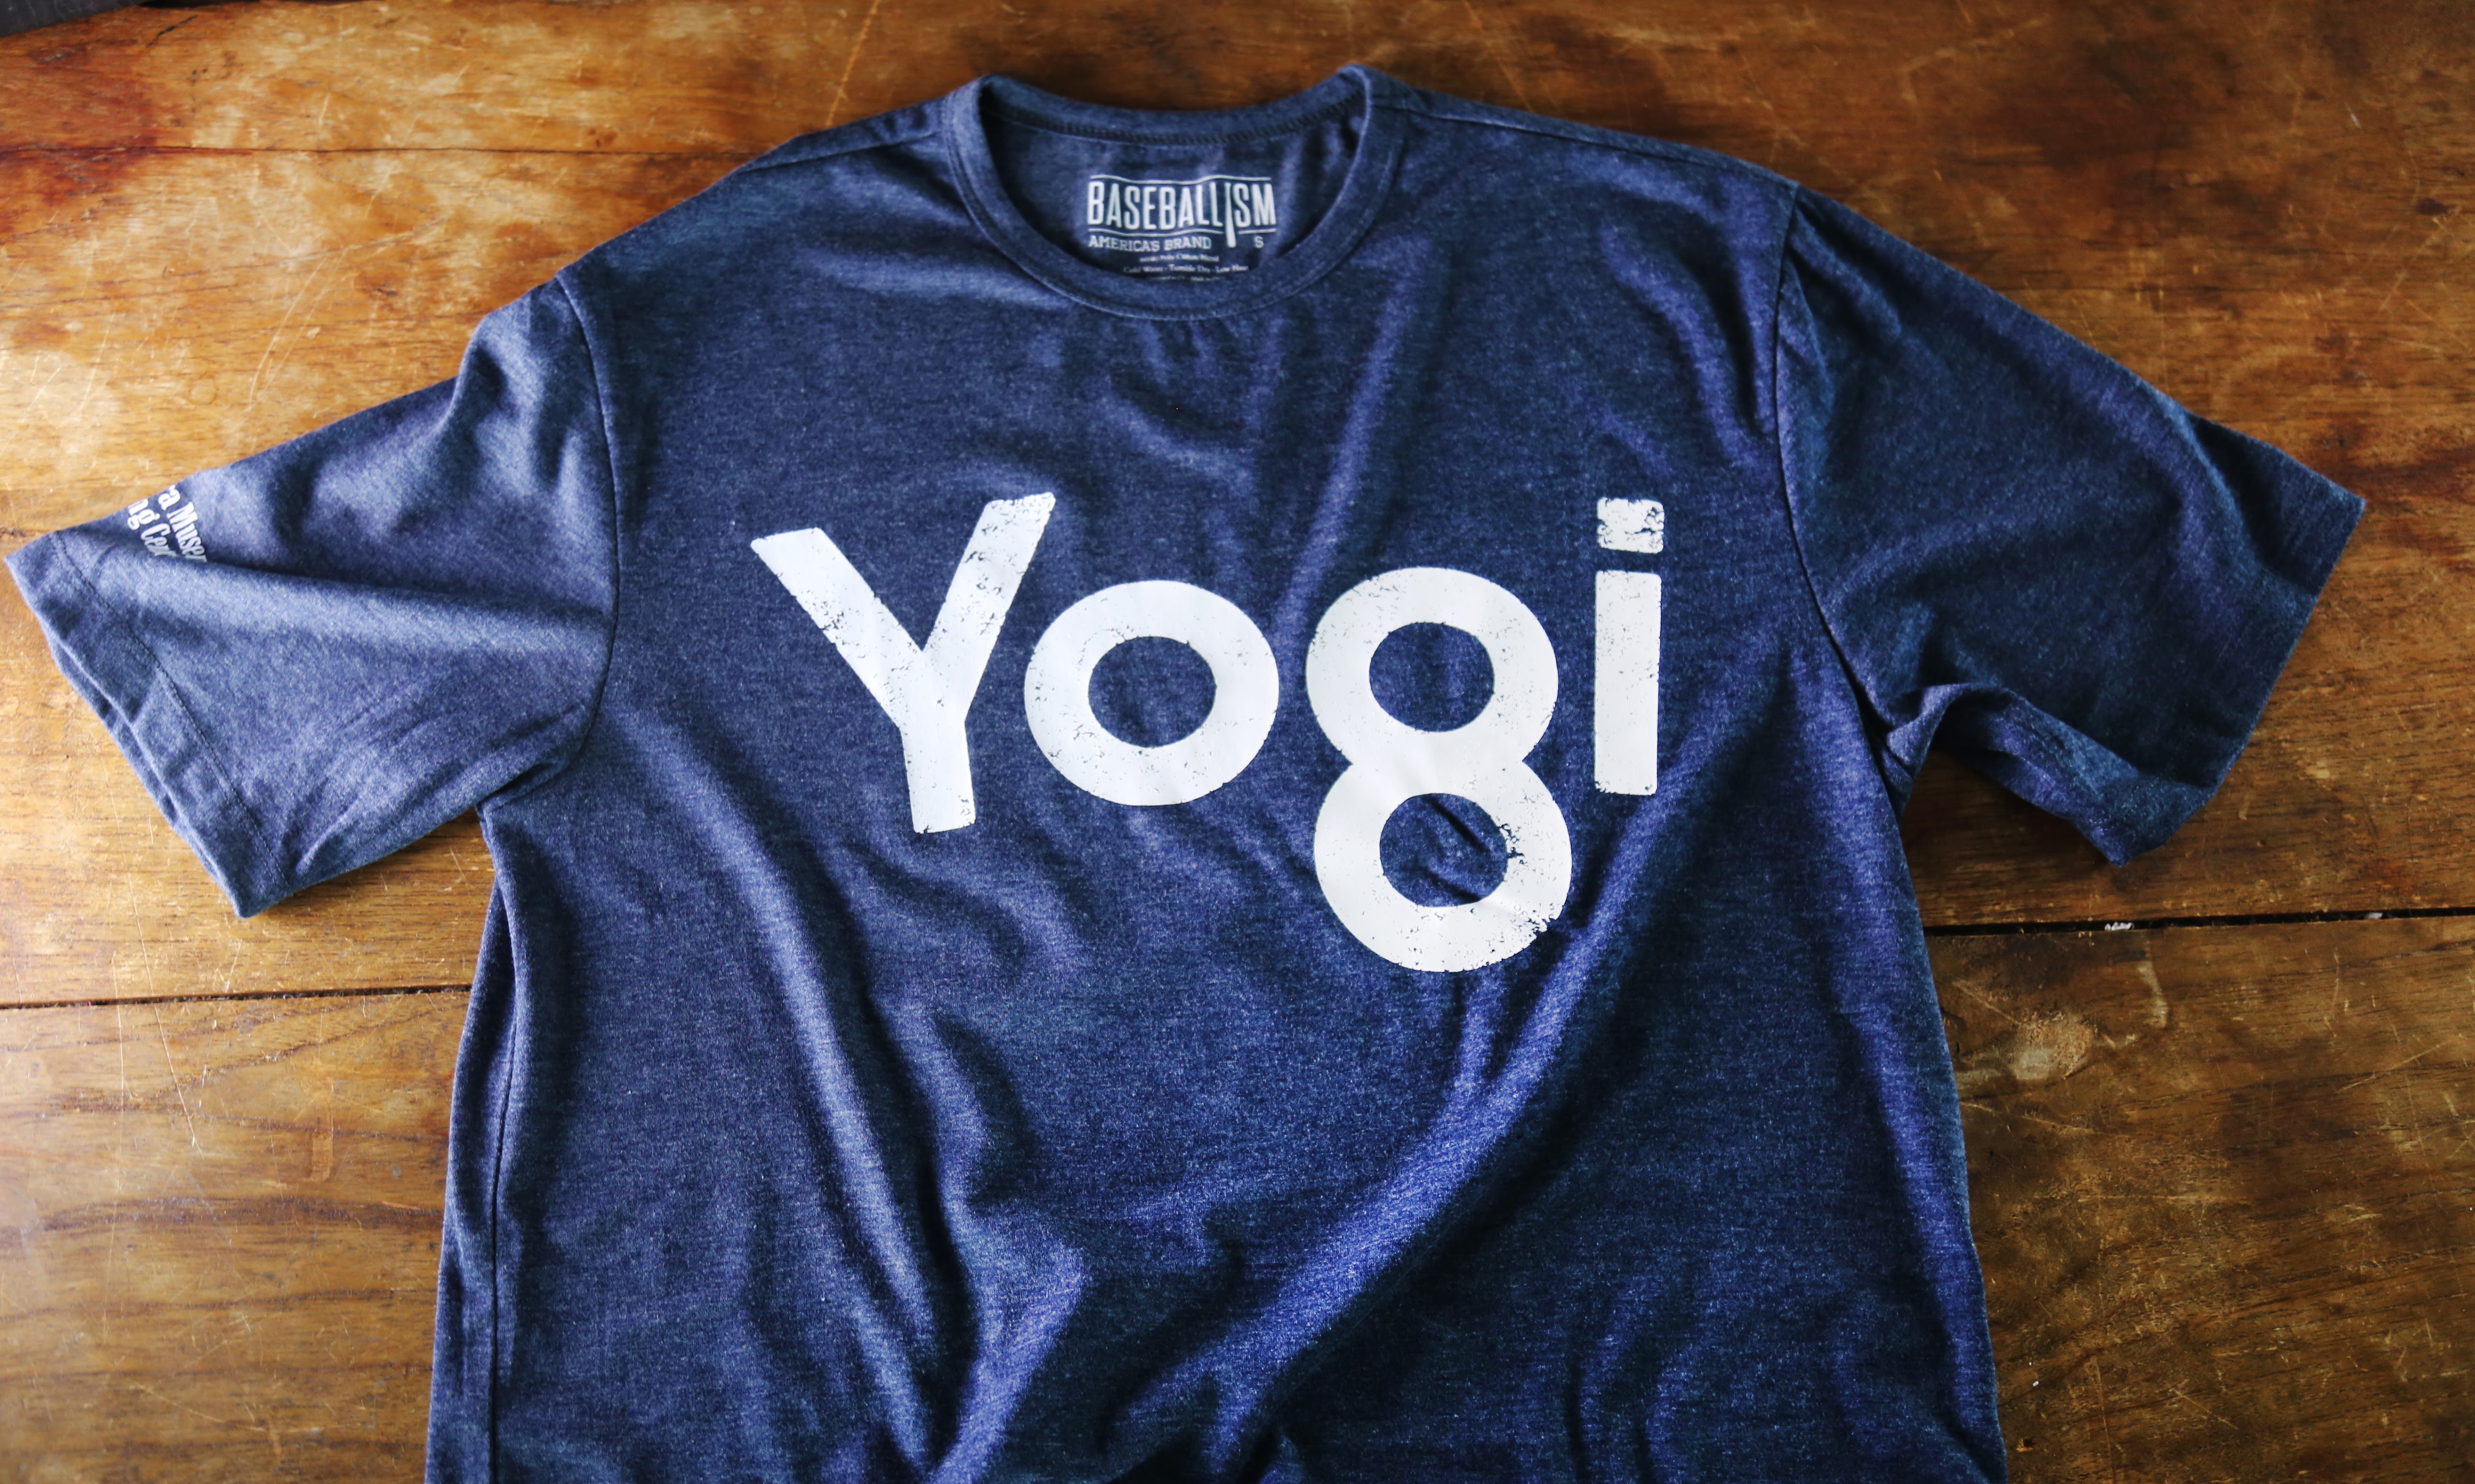 yogi berra jersey number